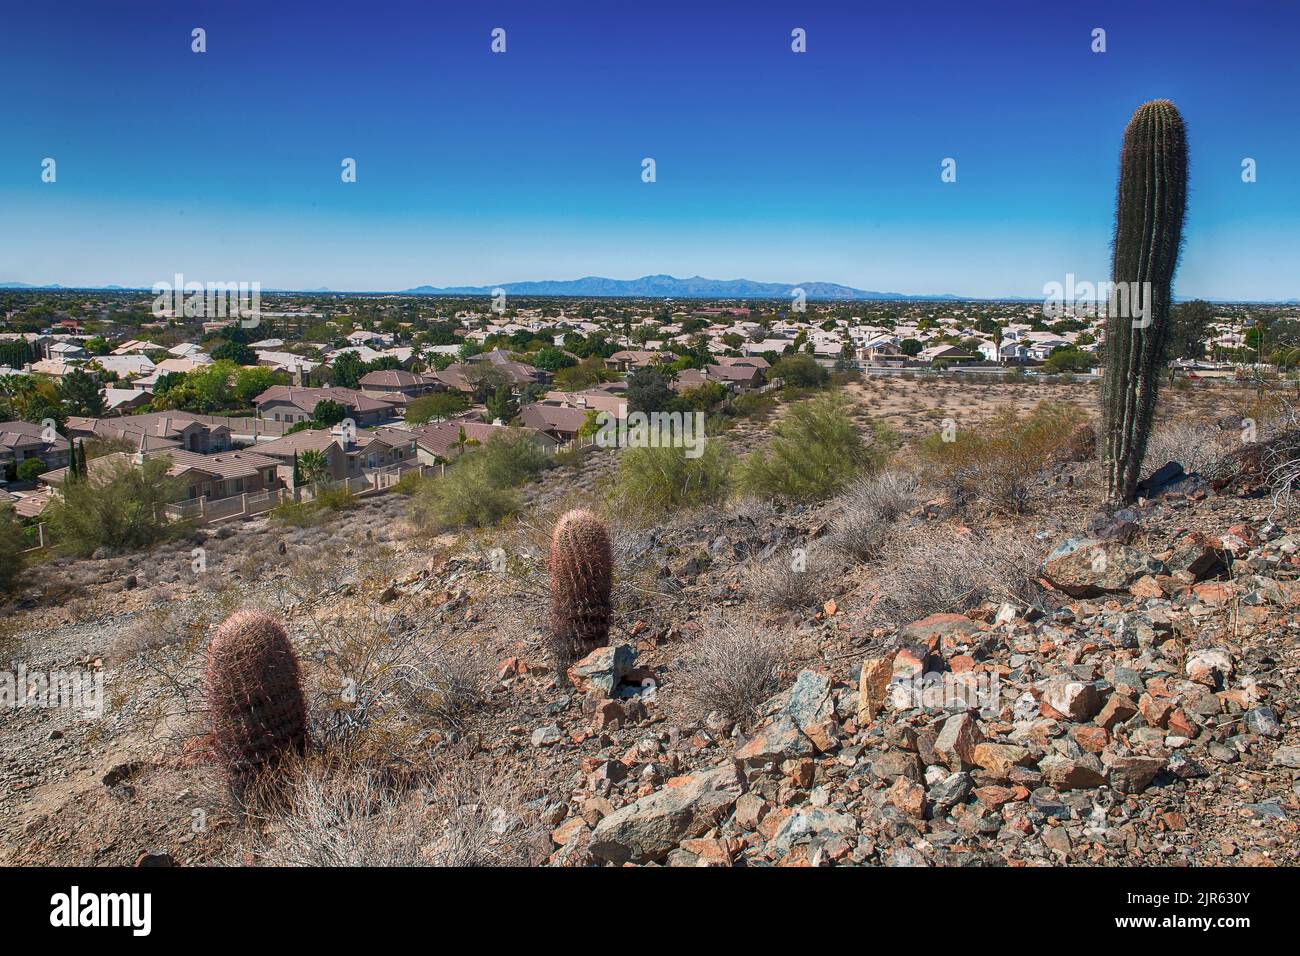 Barrel cacti overlooking the city of Phoenix, Arizona, USA Stock Photo